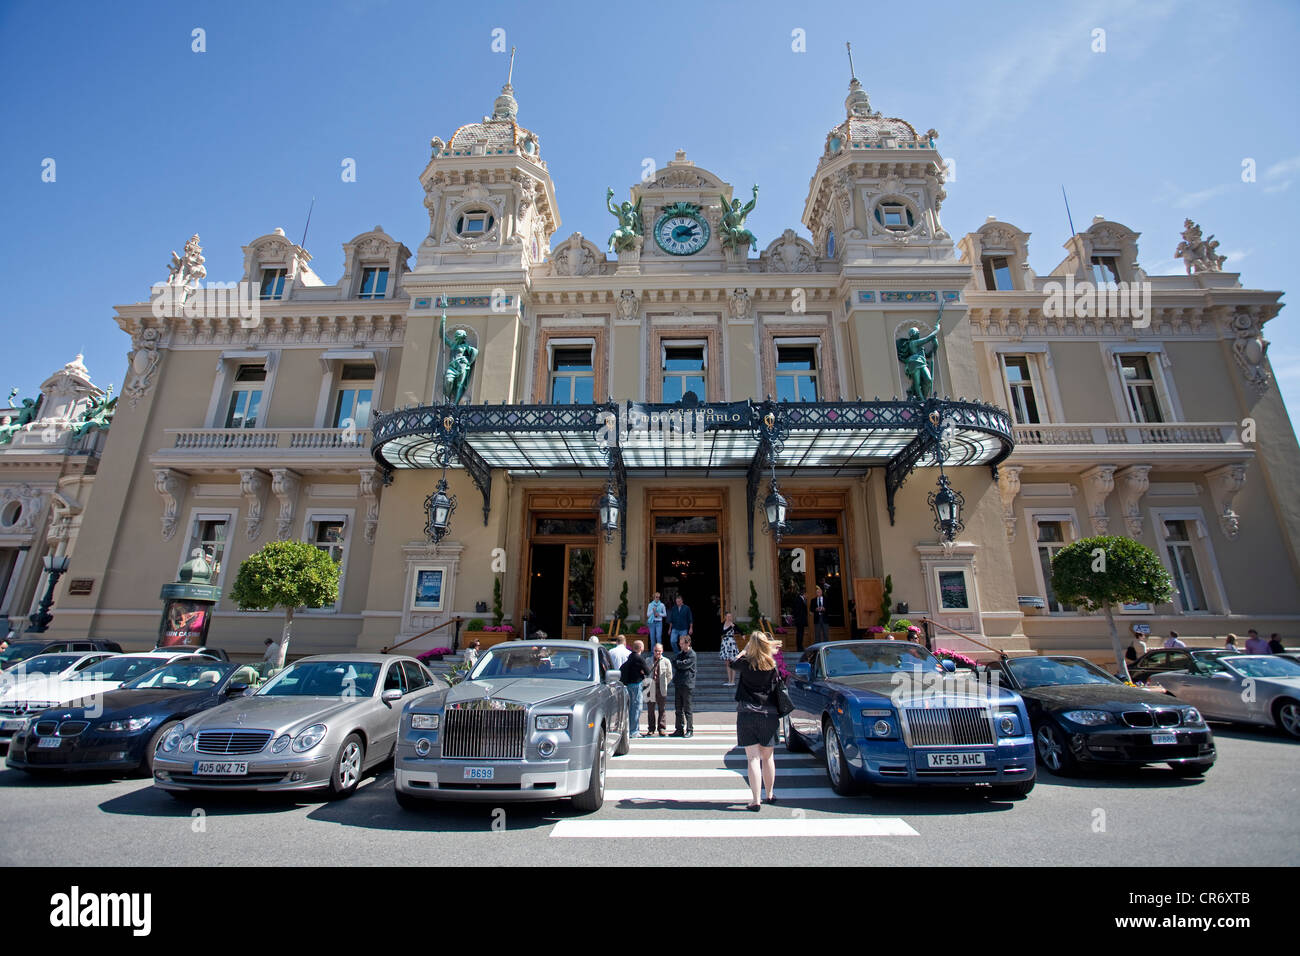 Monte Carlo Casino, Place du Casino square, luxury cars ...